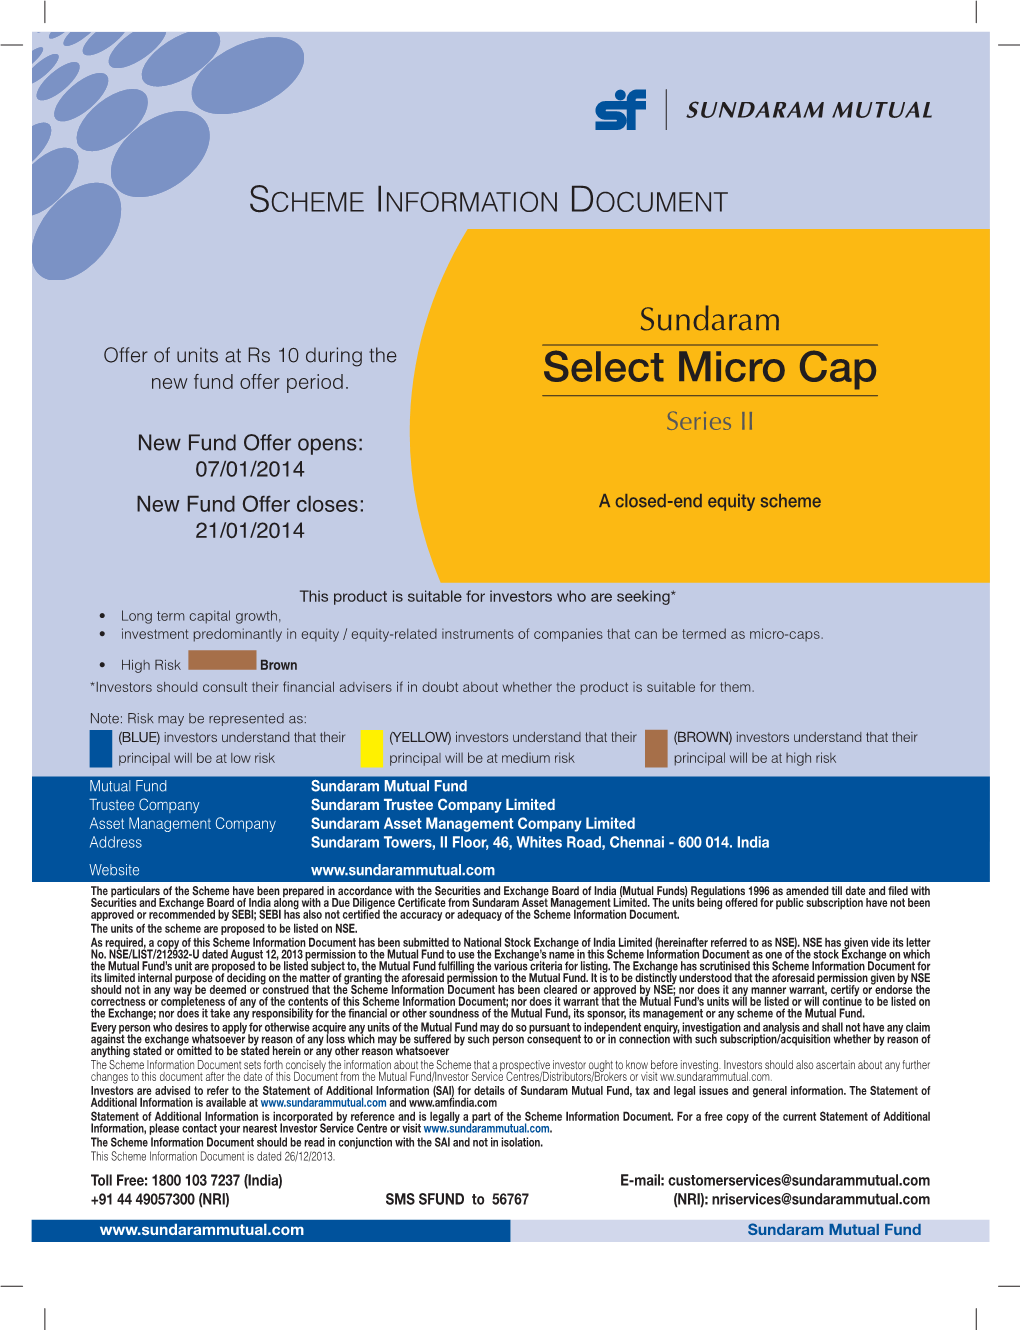 Sundaram Select Micro Cap-Series II